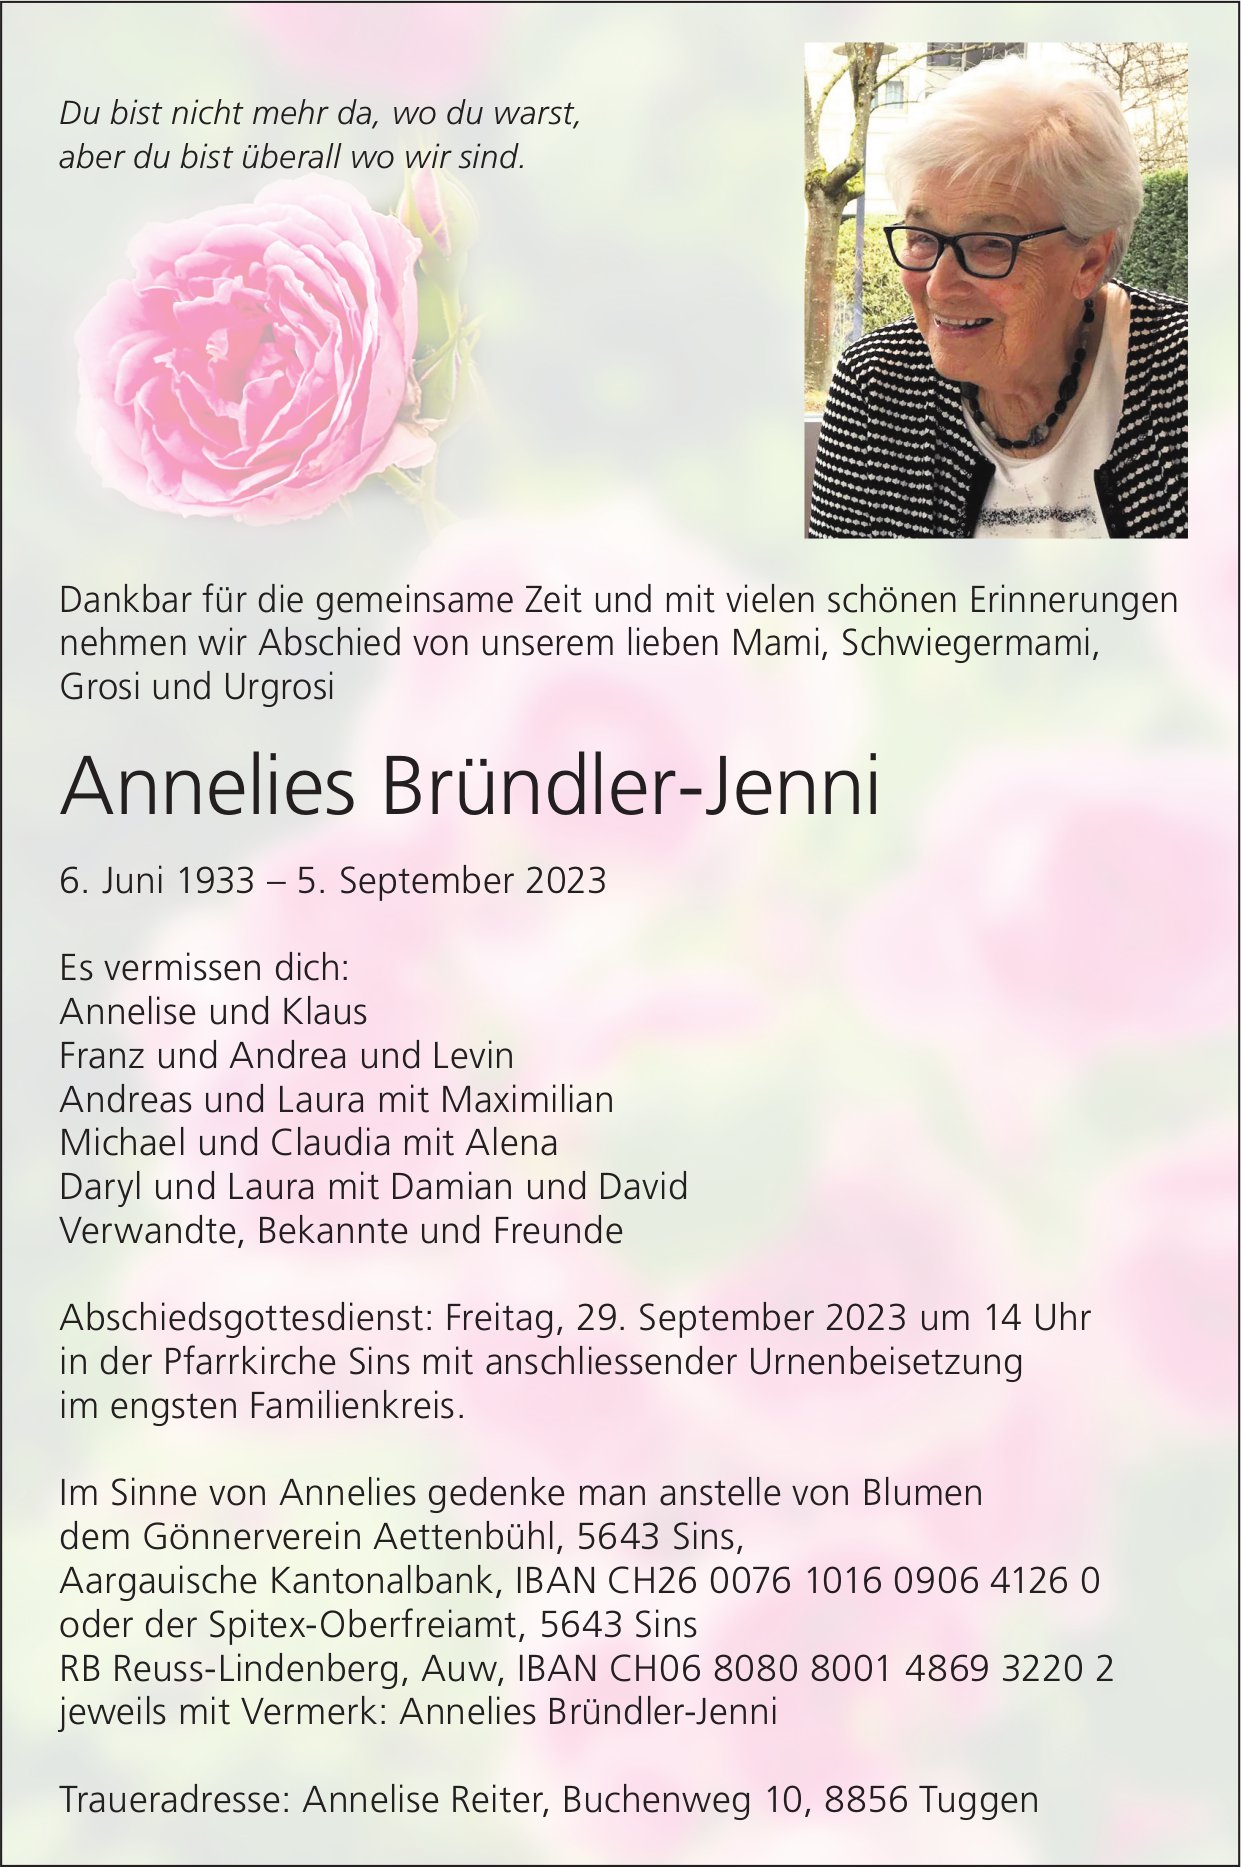 Bründler-Jenni Annelies, September 2023 / TA